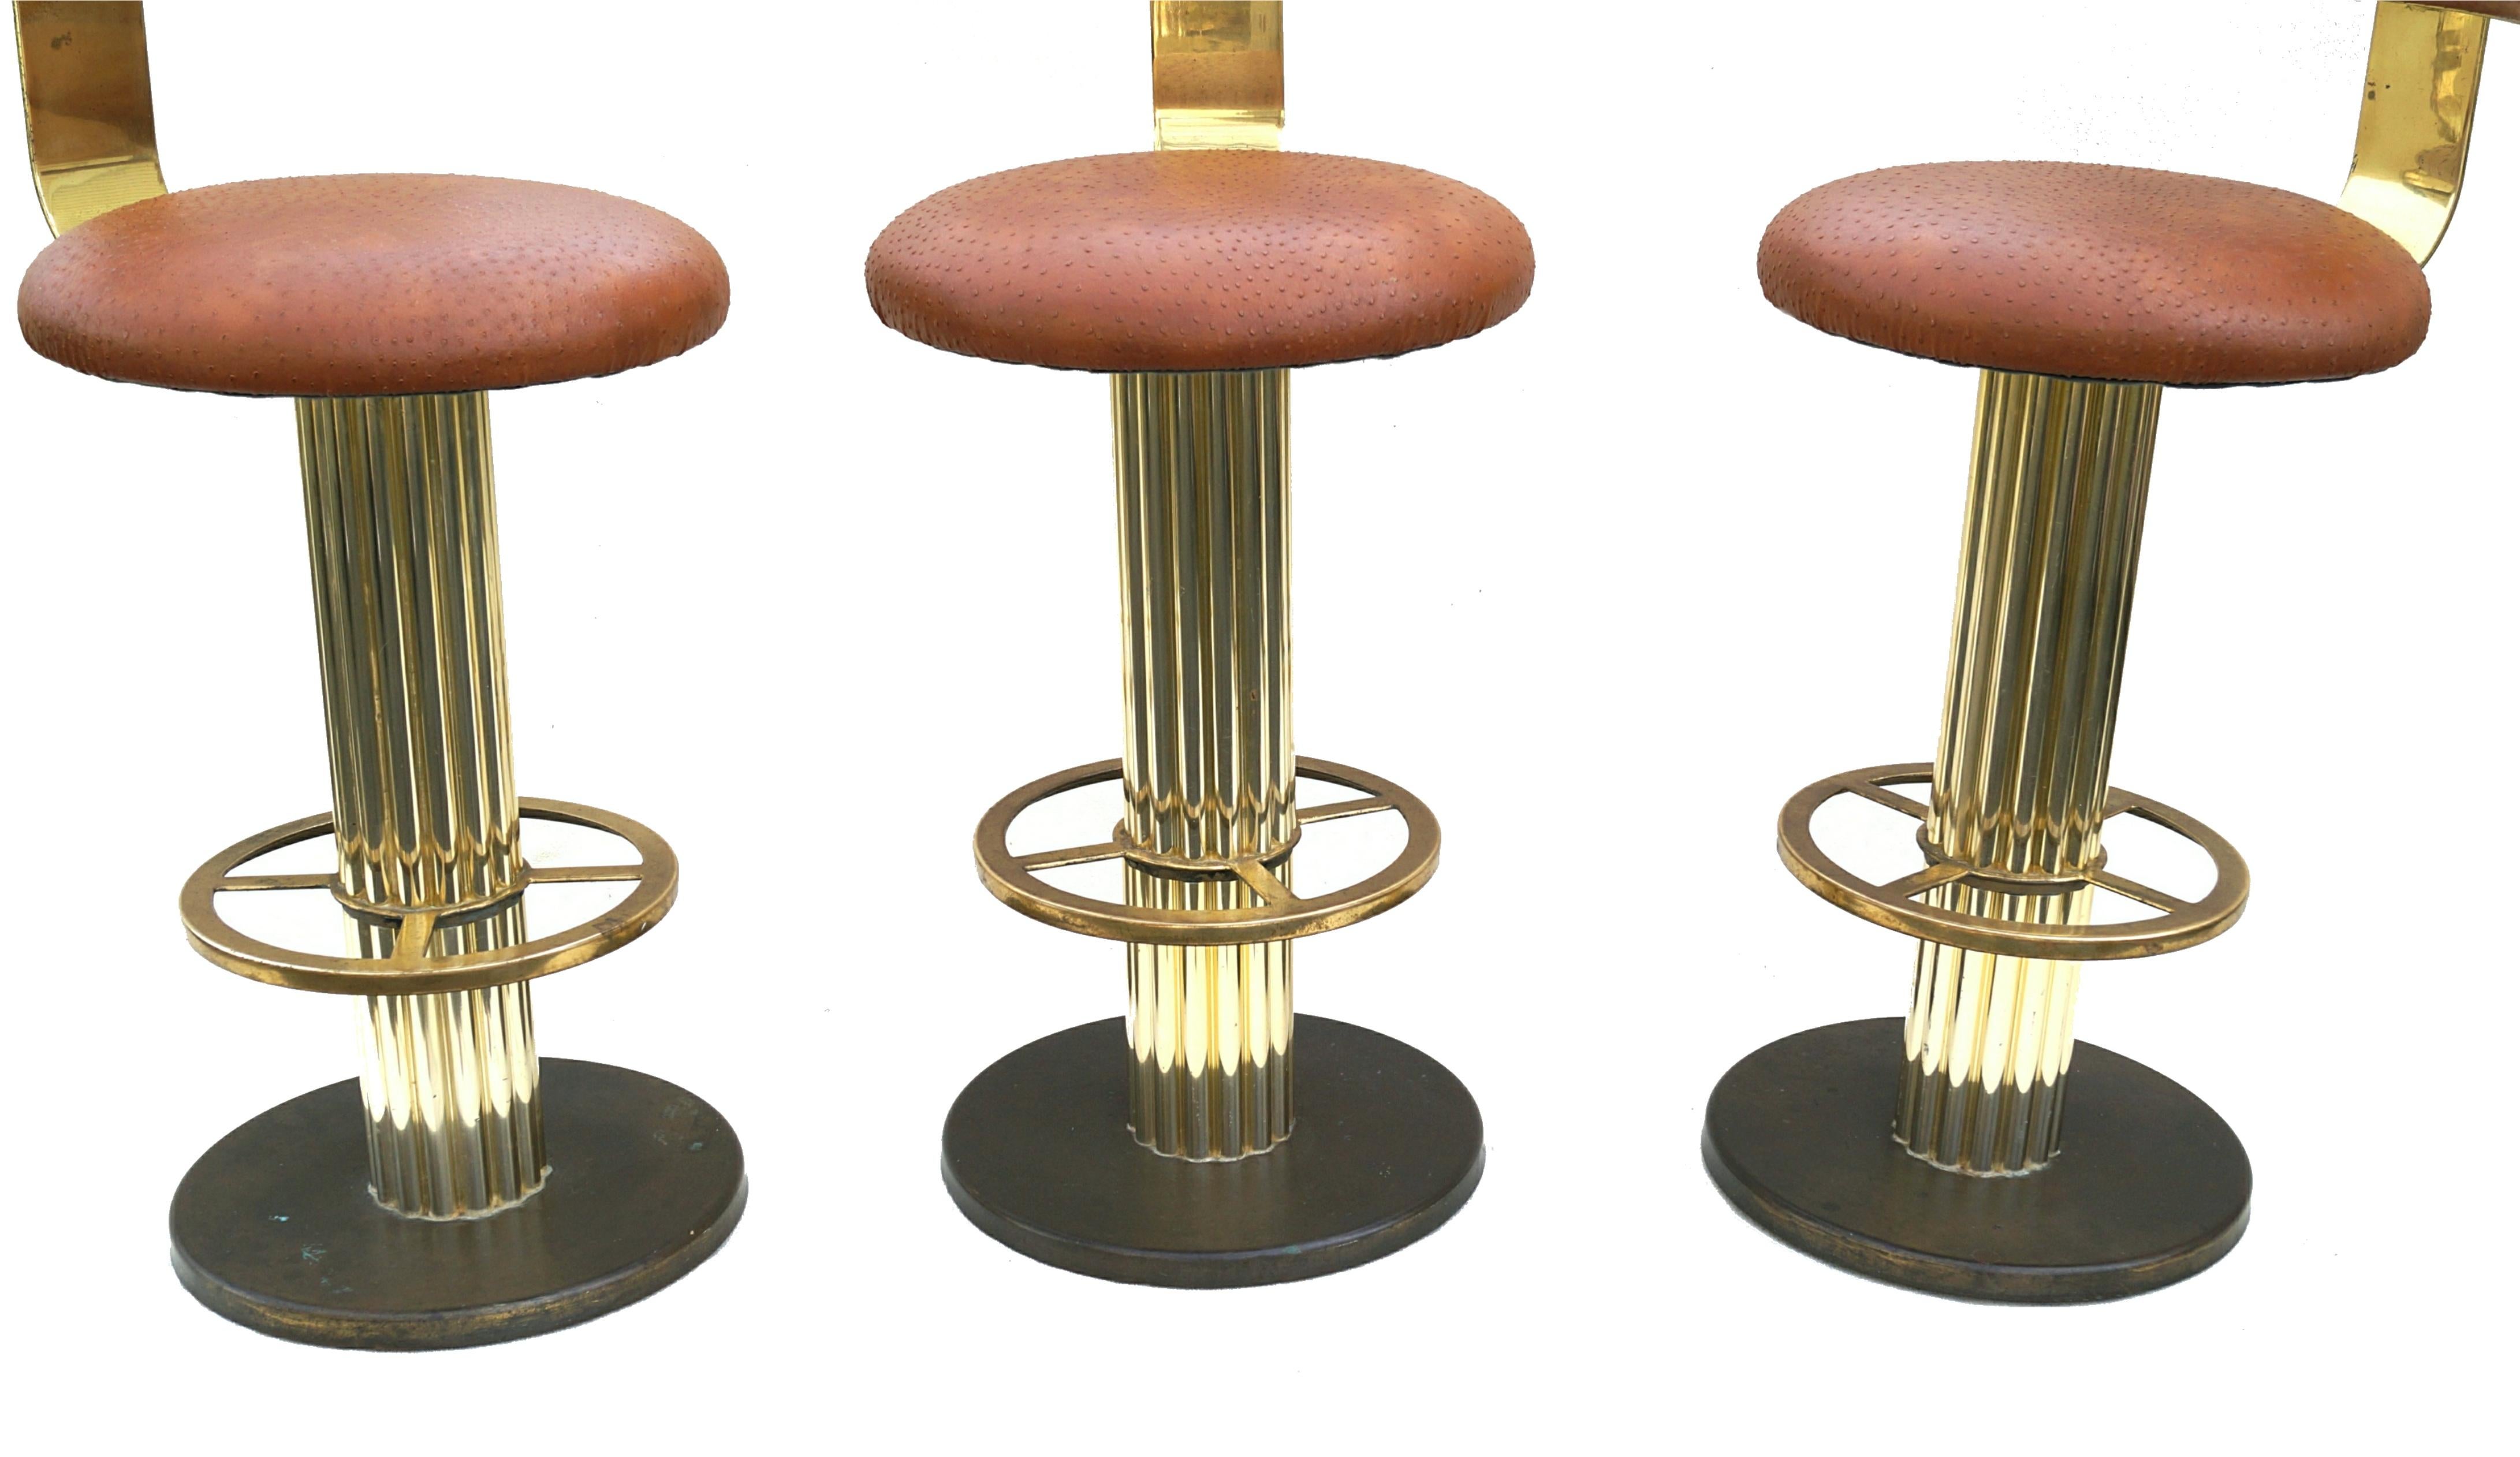 American Modern Design For Leisure Ostrich Brass Bar Stools Set of 3 Barstool